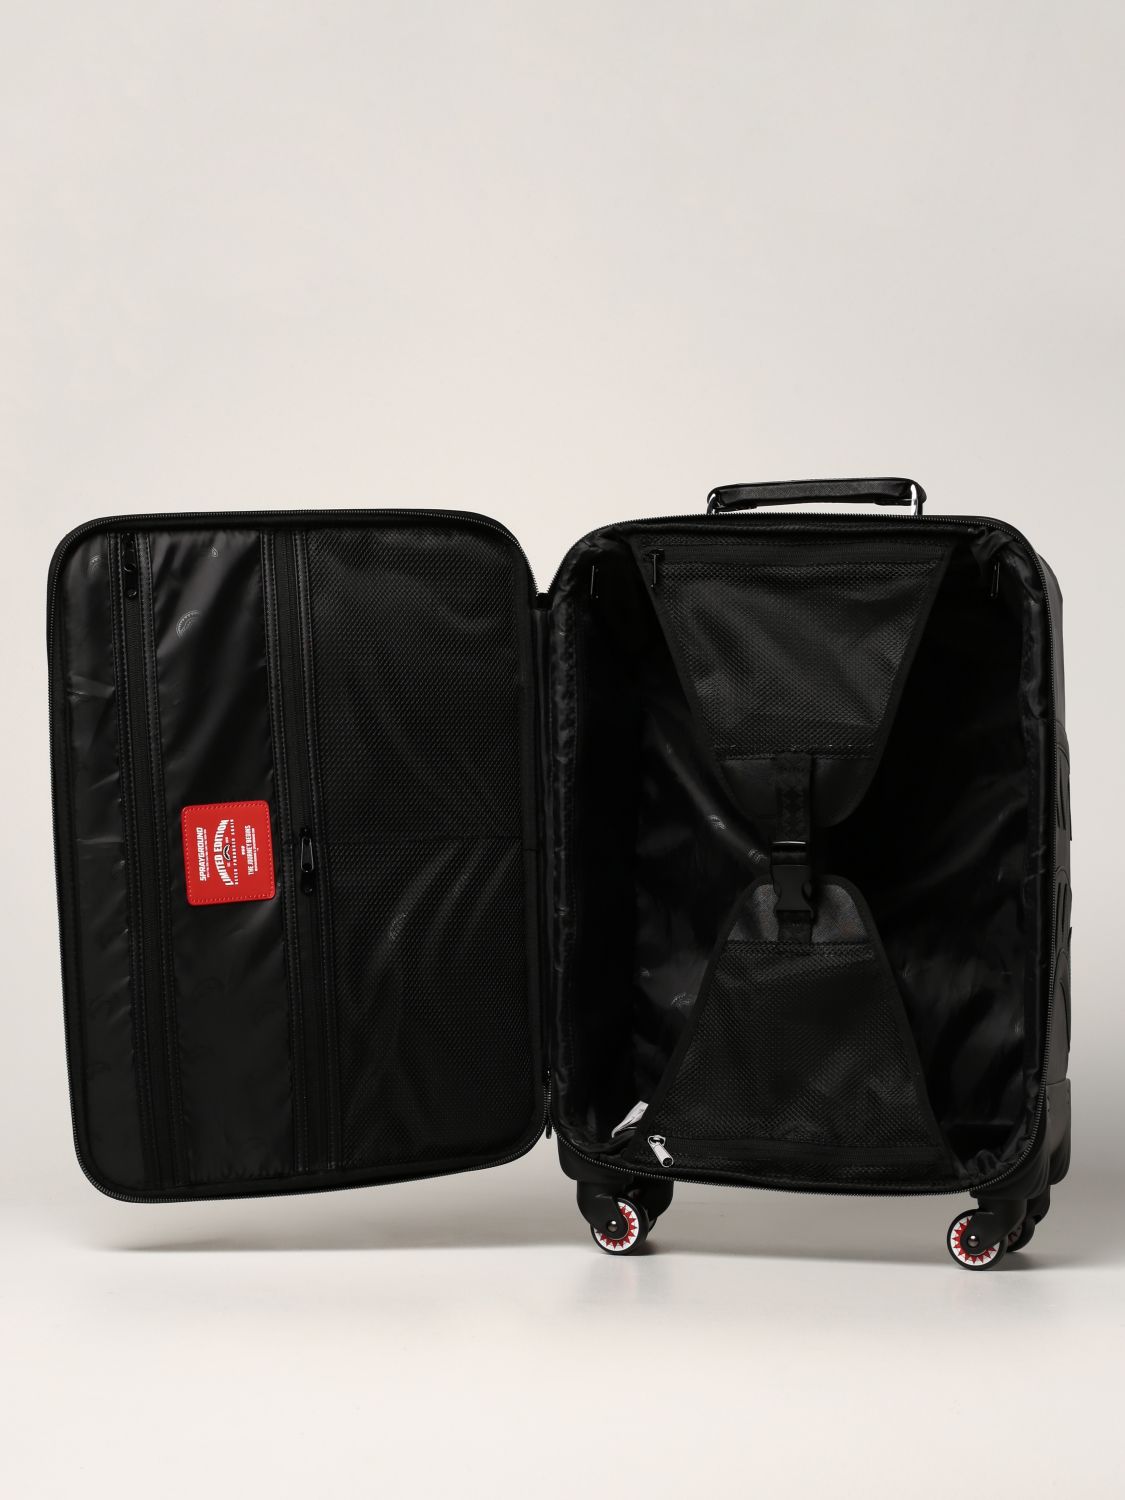 Travel bag Sprayground: Trolley 3am never sleep carry-on luggage Sprayground black 2